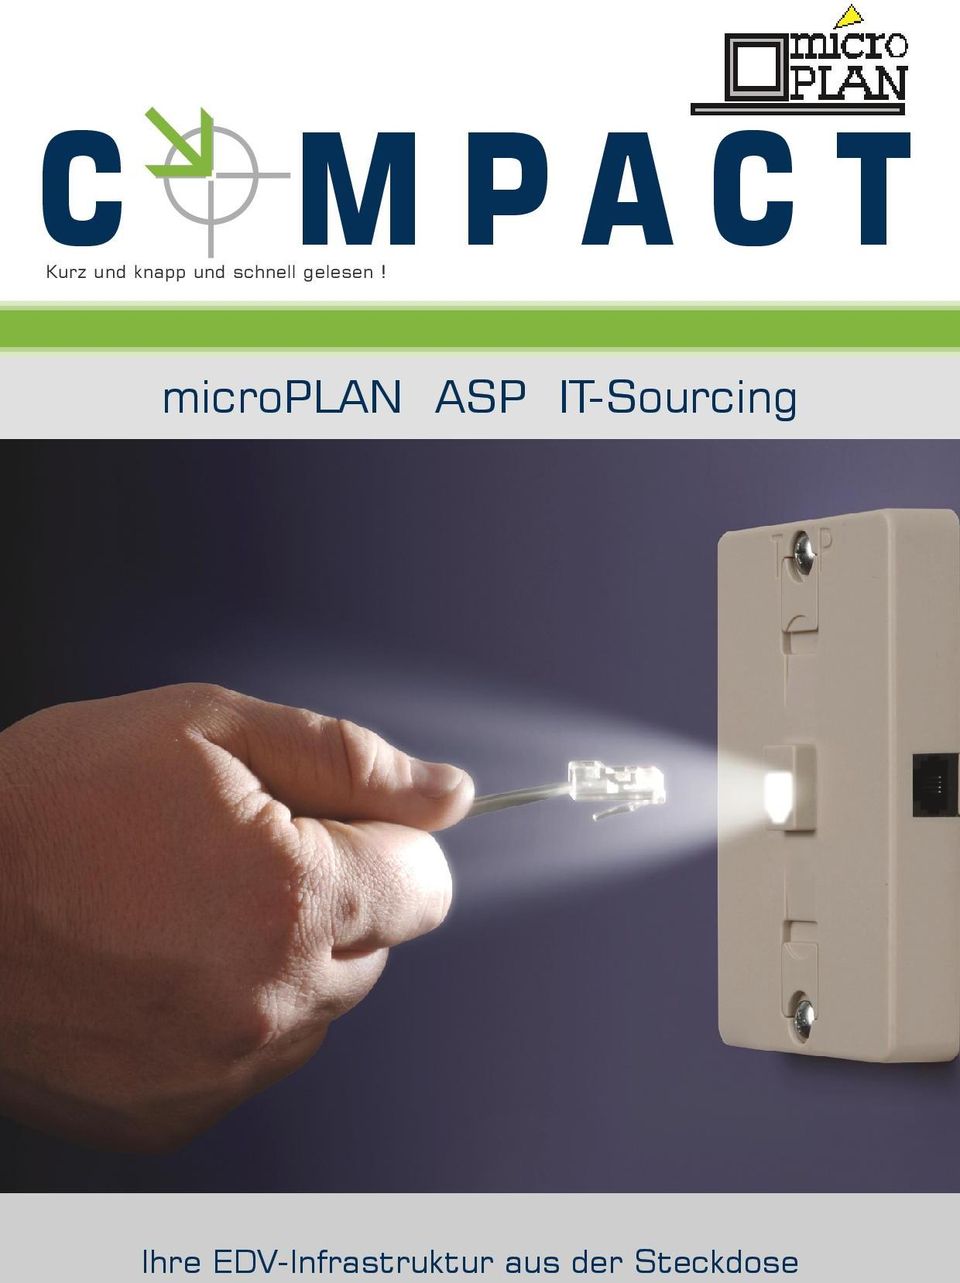 microplan ASP IT-Sourcing